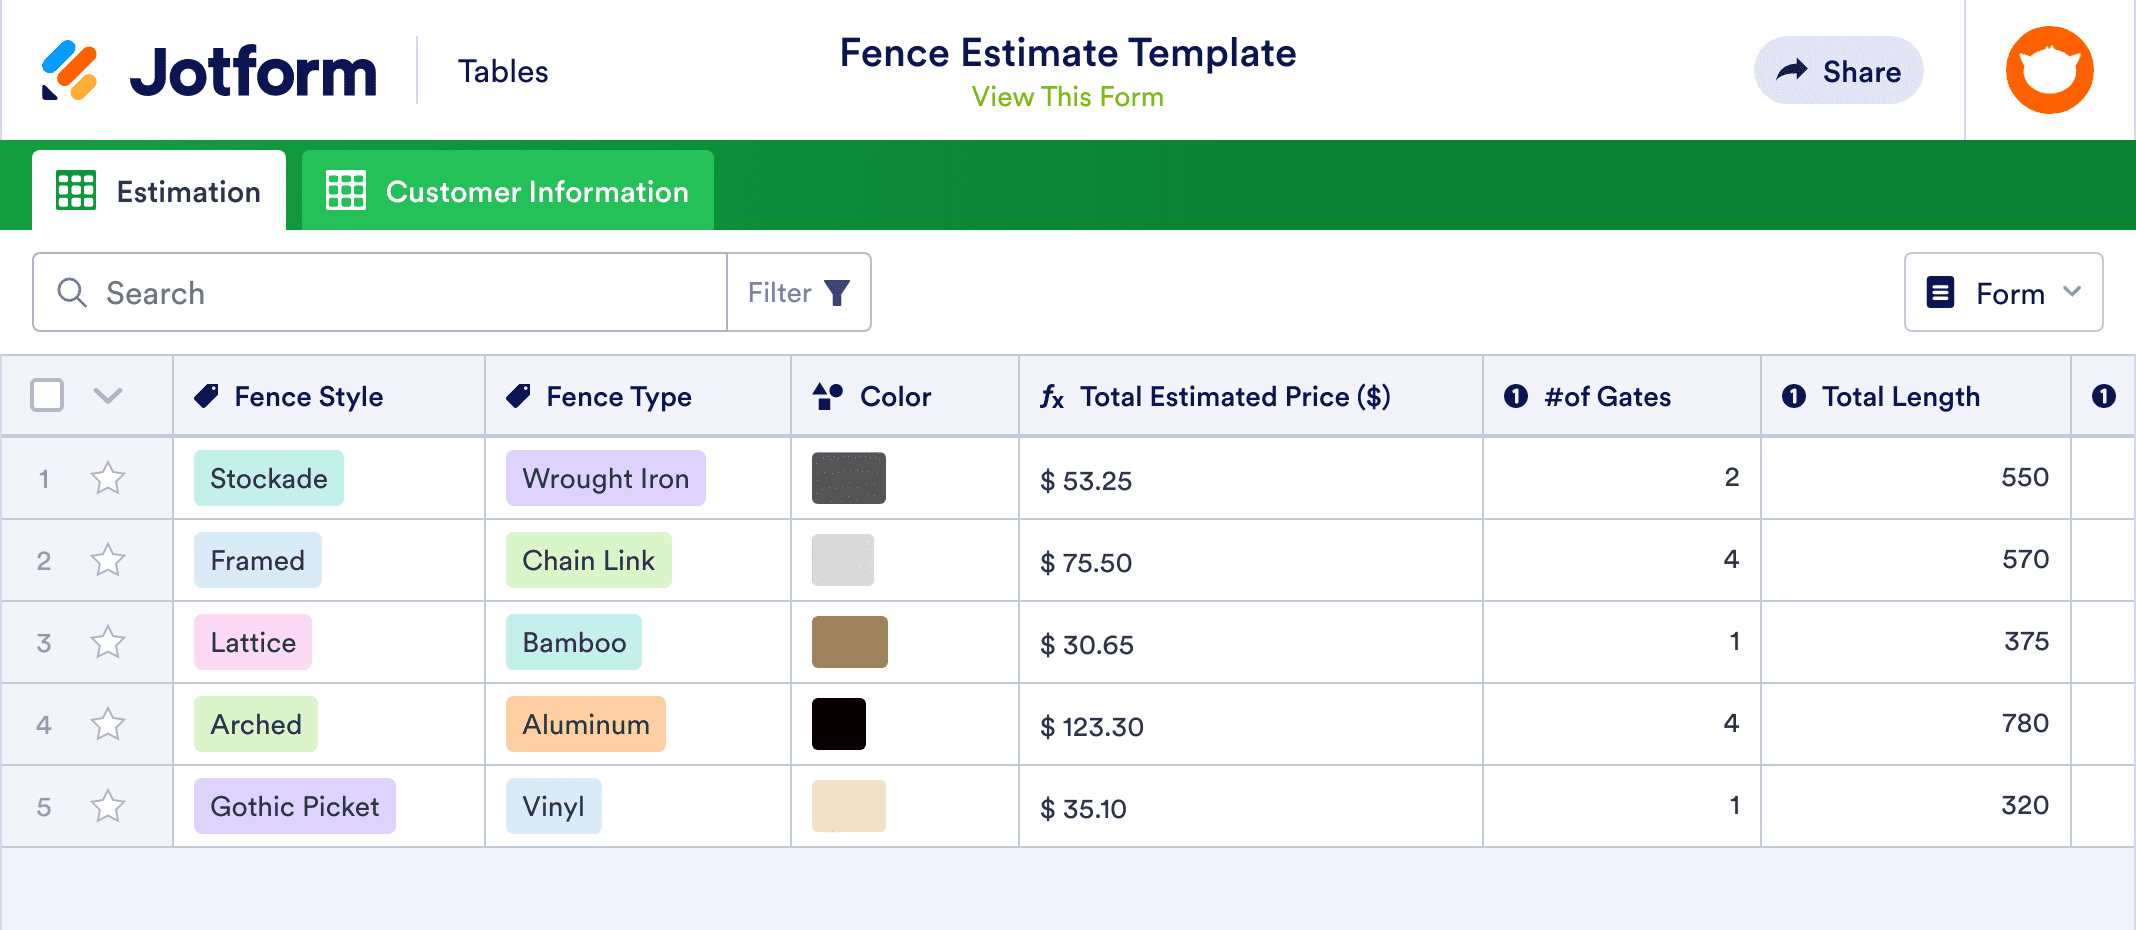 Fence Estimate Template | Jotform Tables